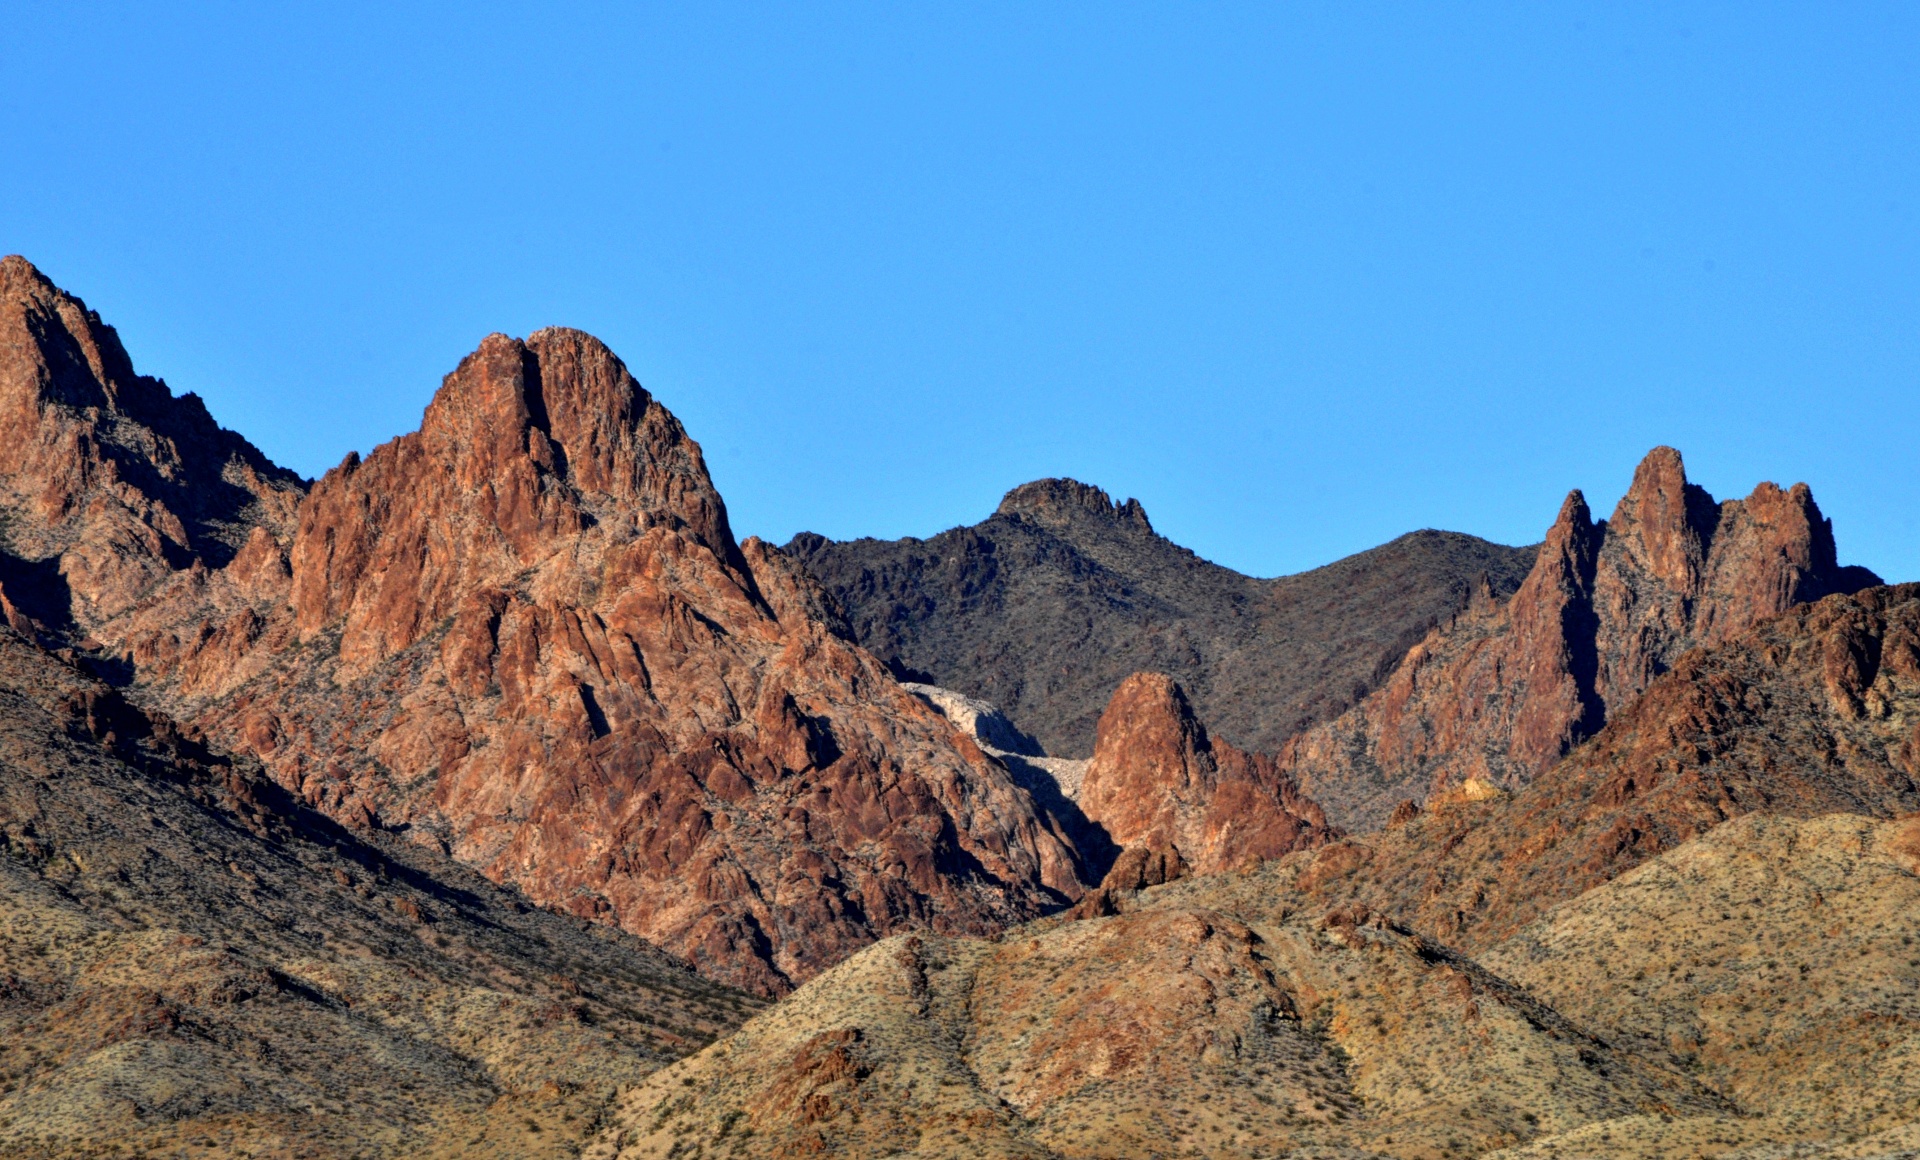 Desert Mountains Landscape